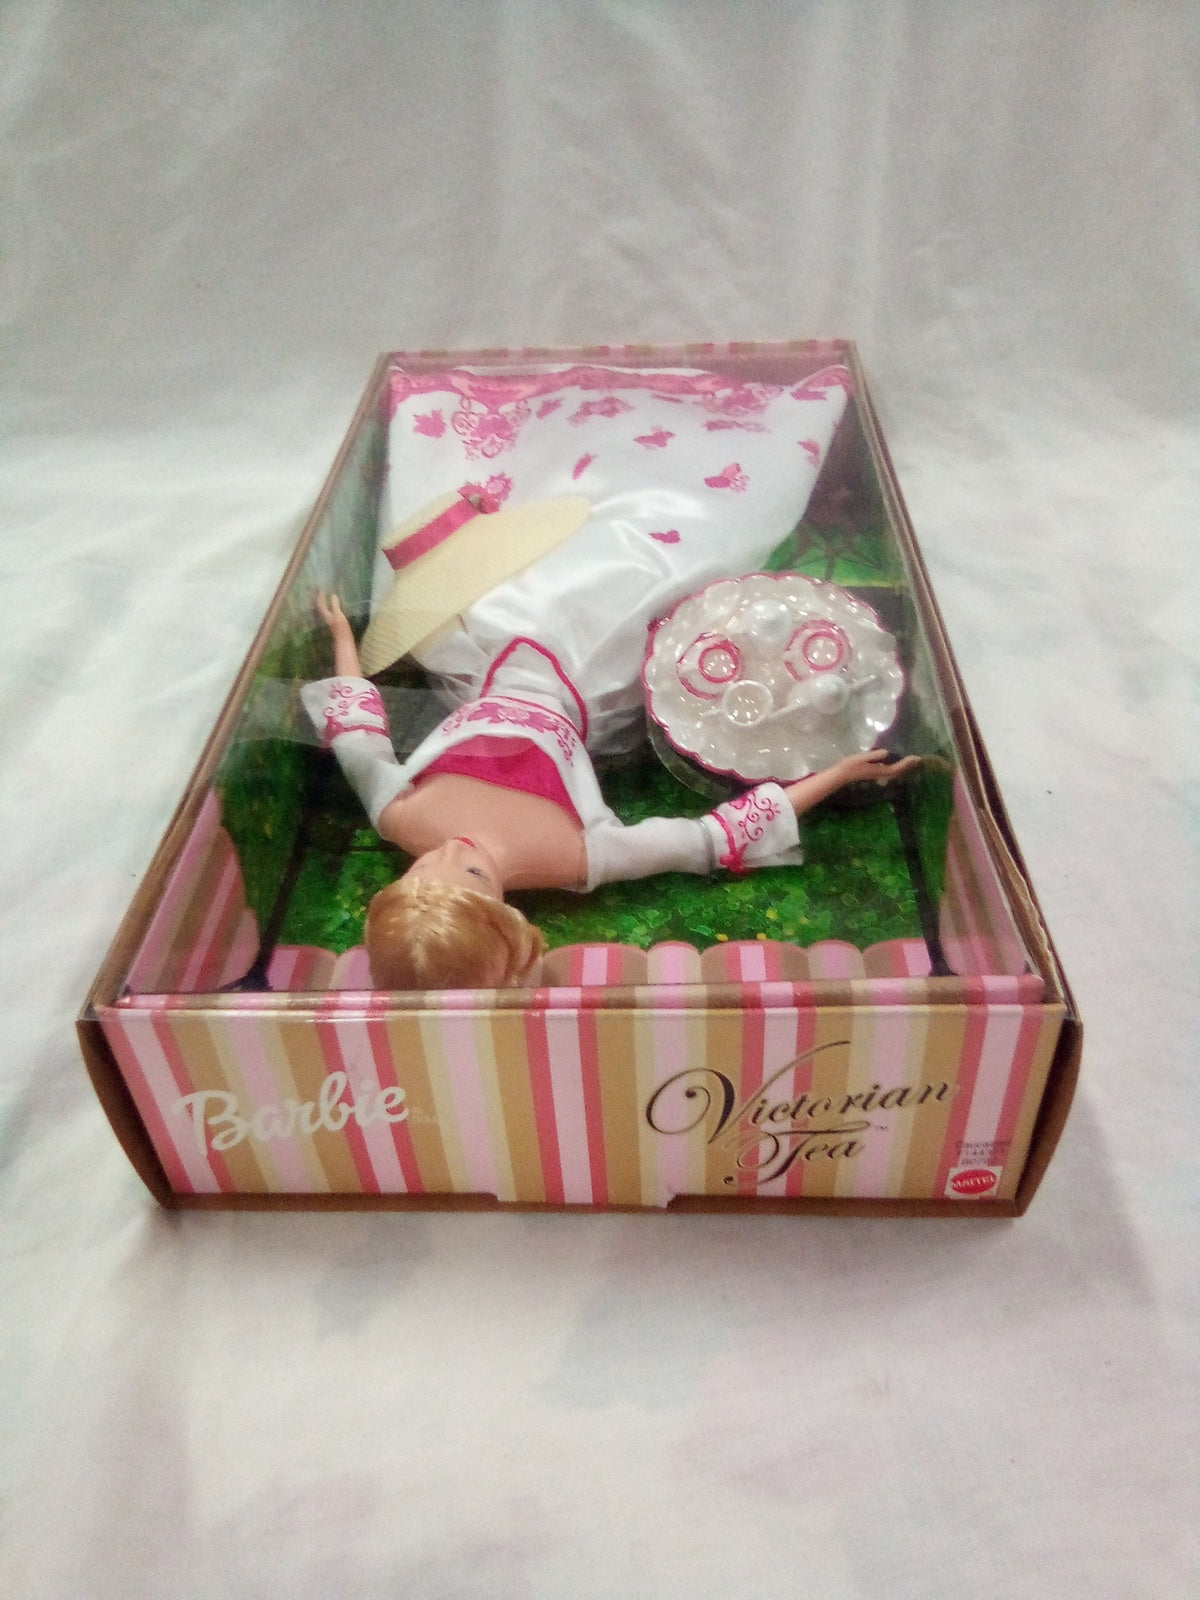 BARBIE Mattel "Victorian Tea Barbie"